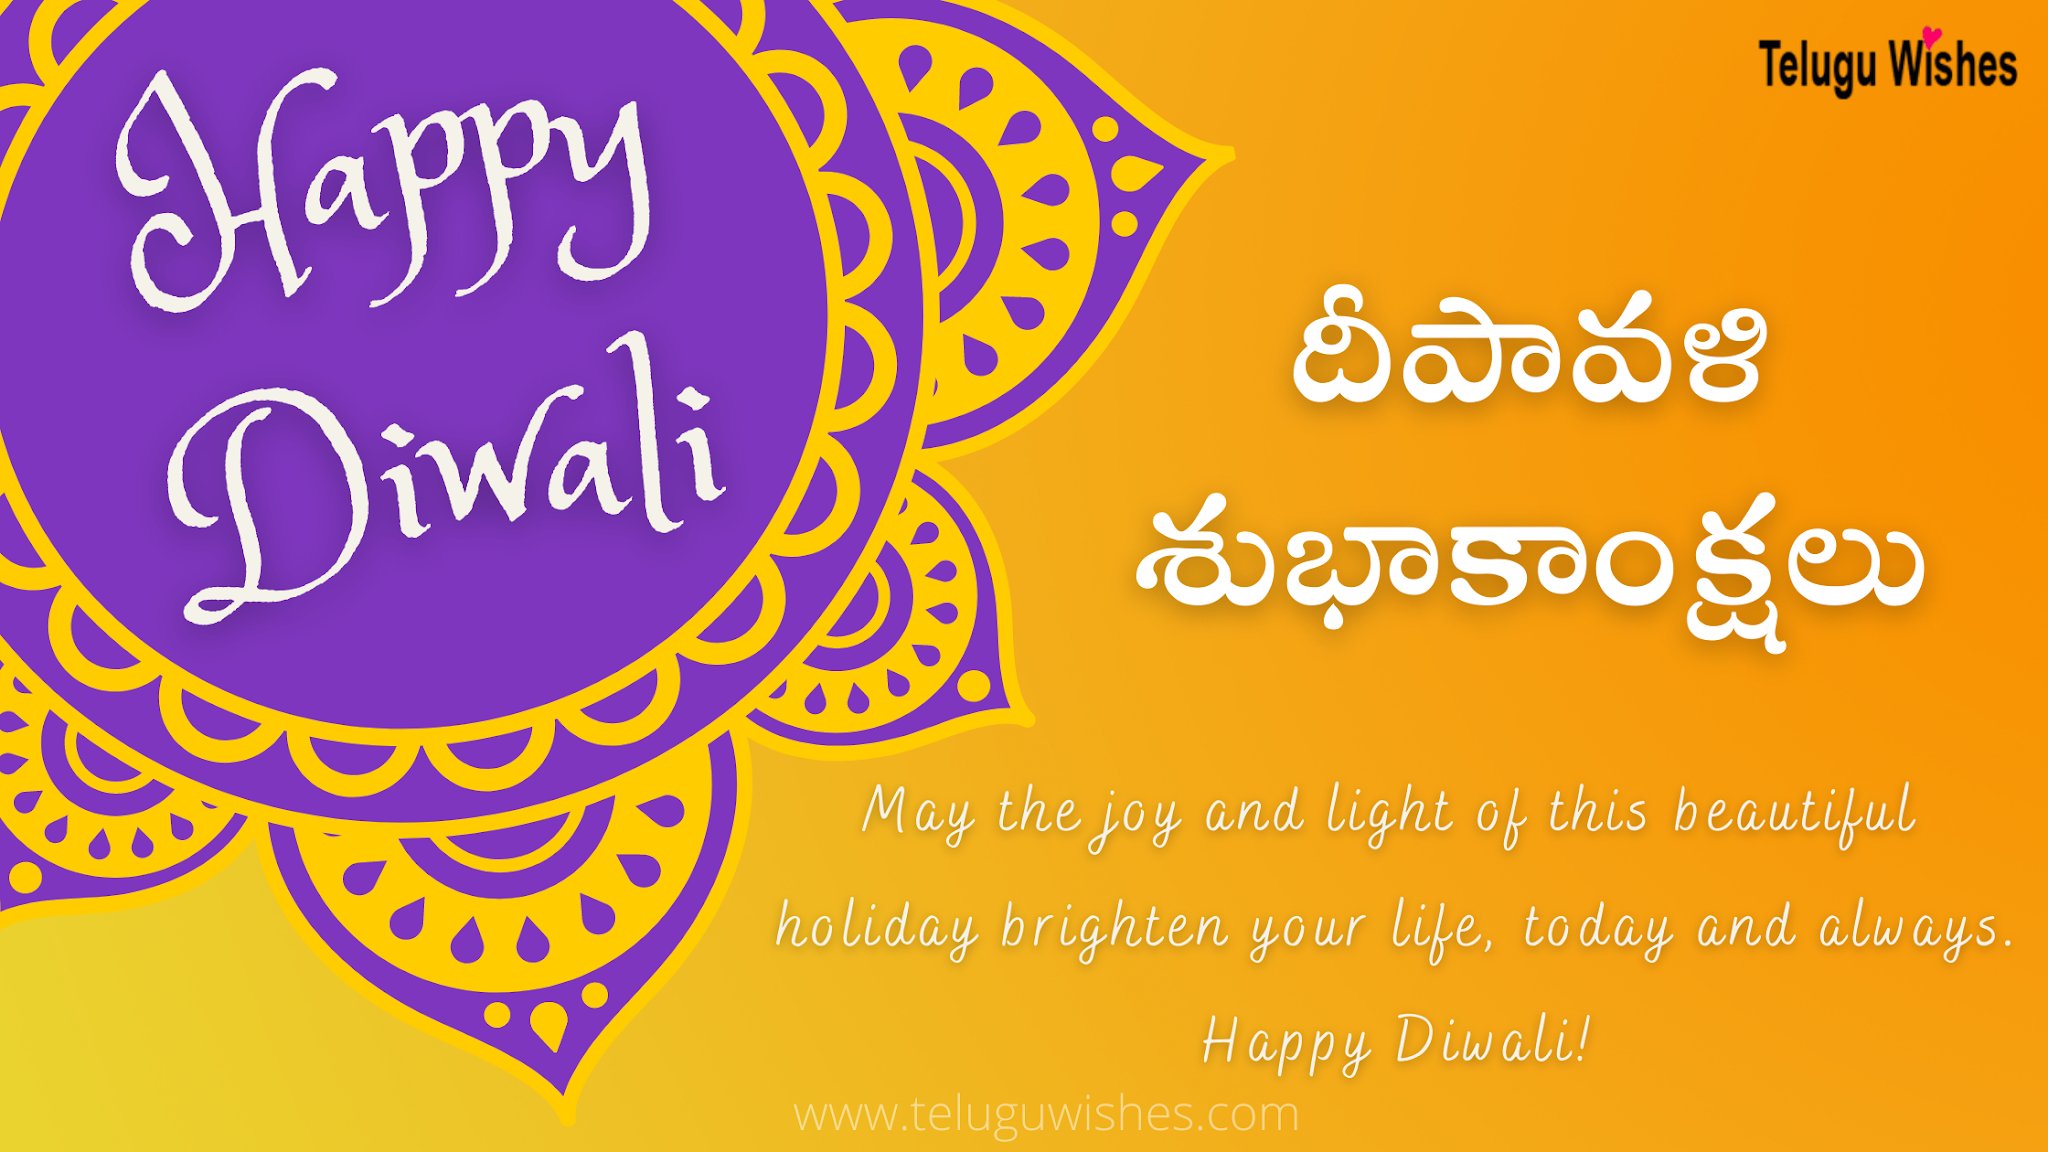 Diwali wishes in Telugu